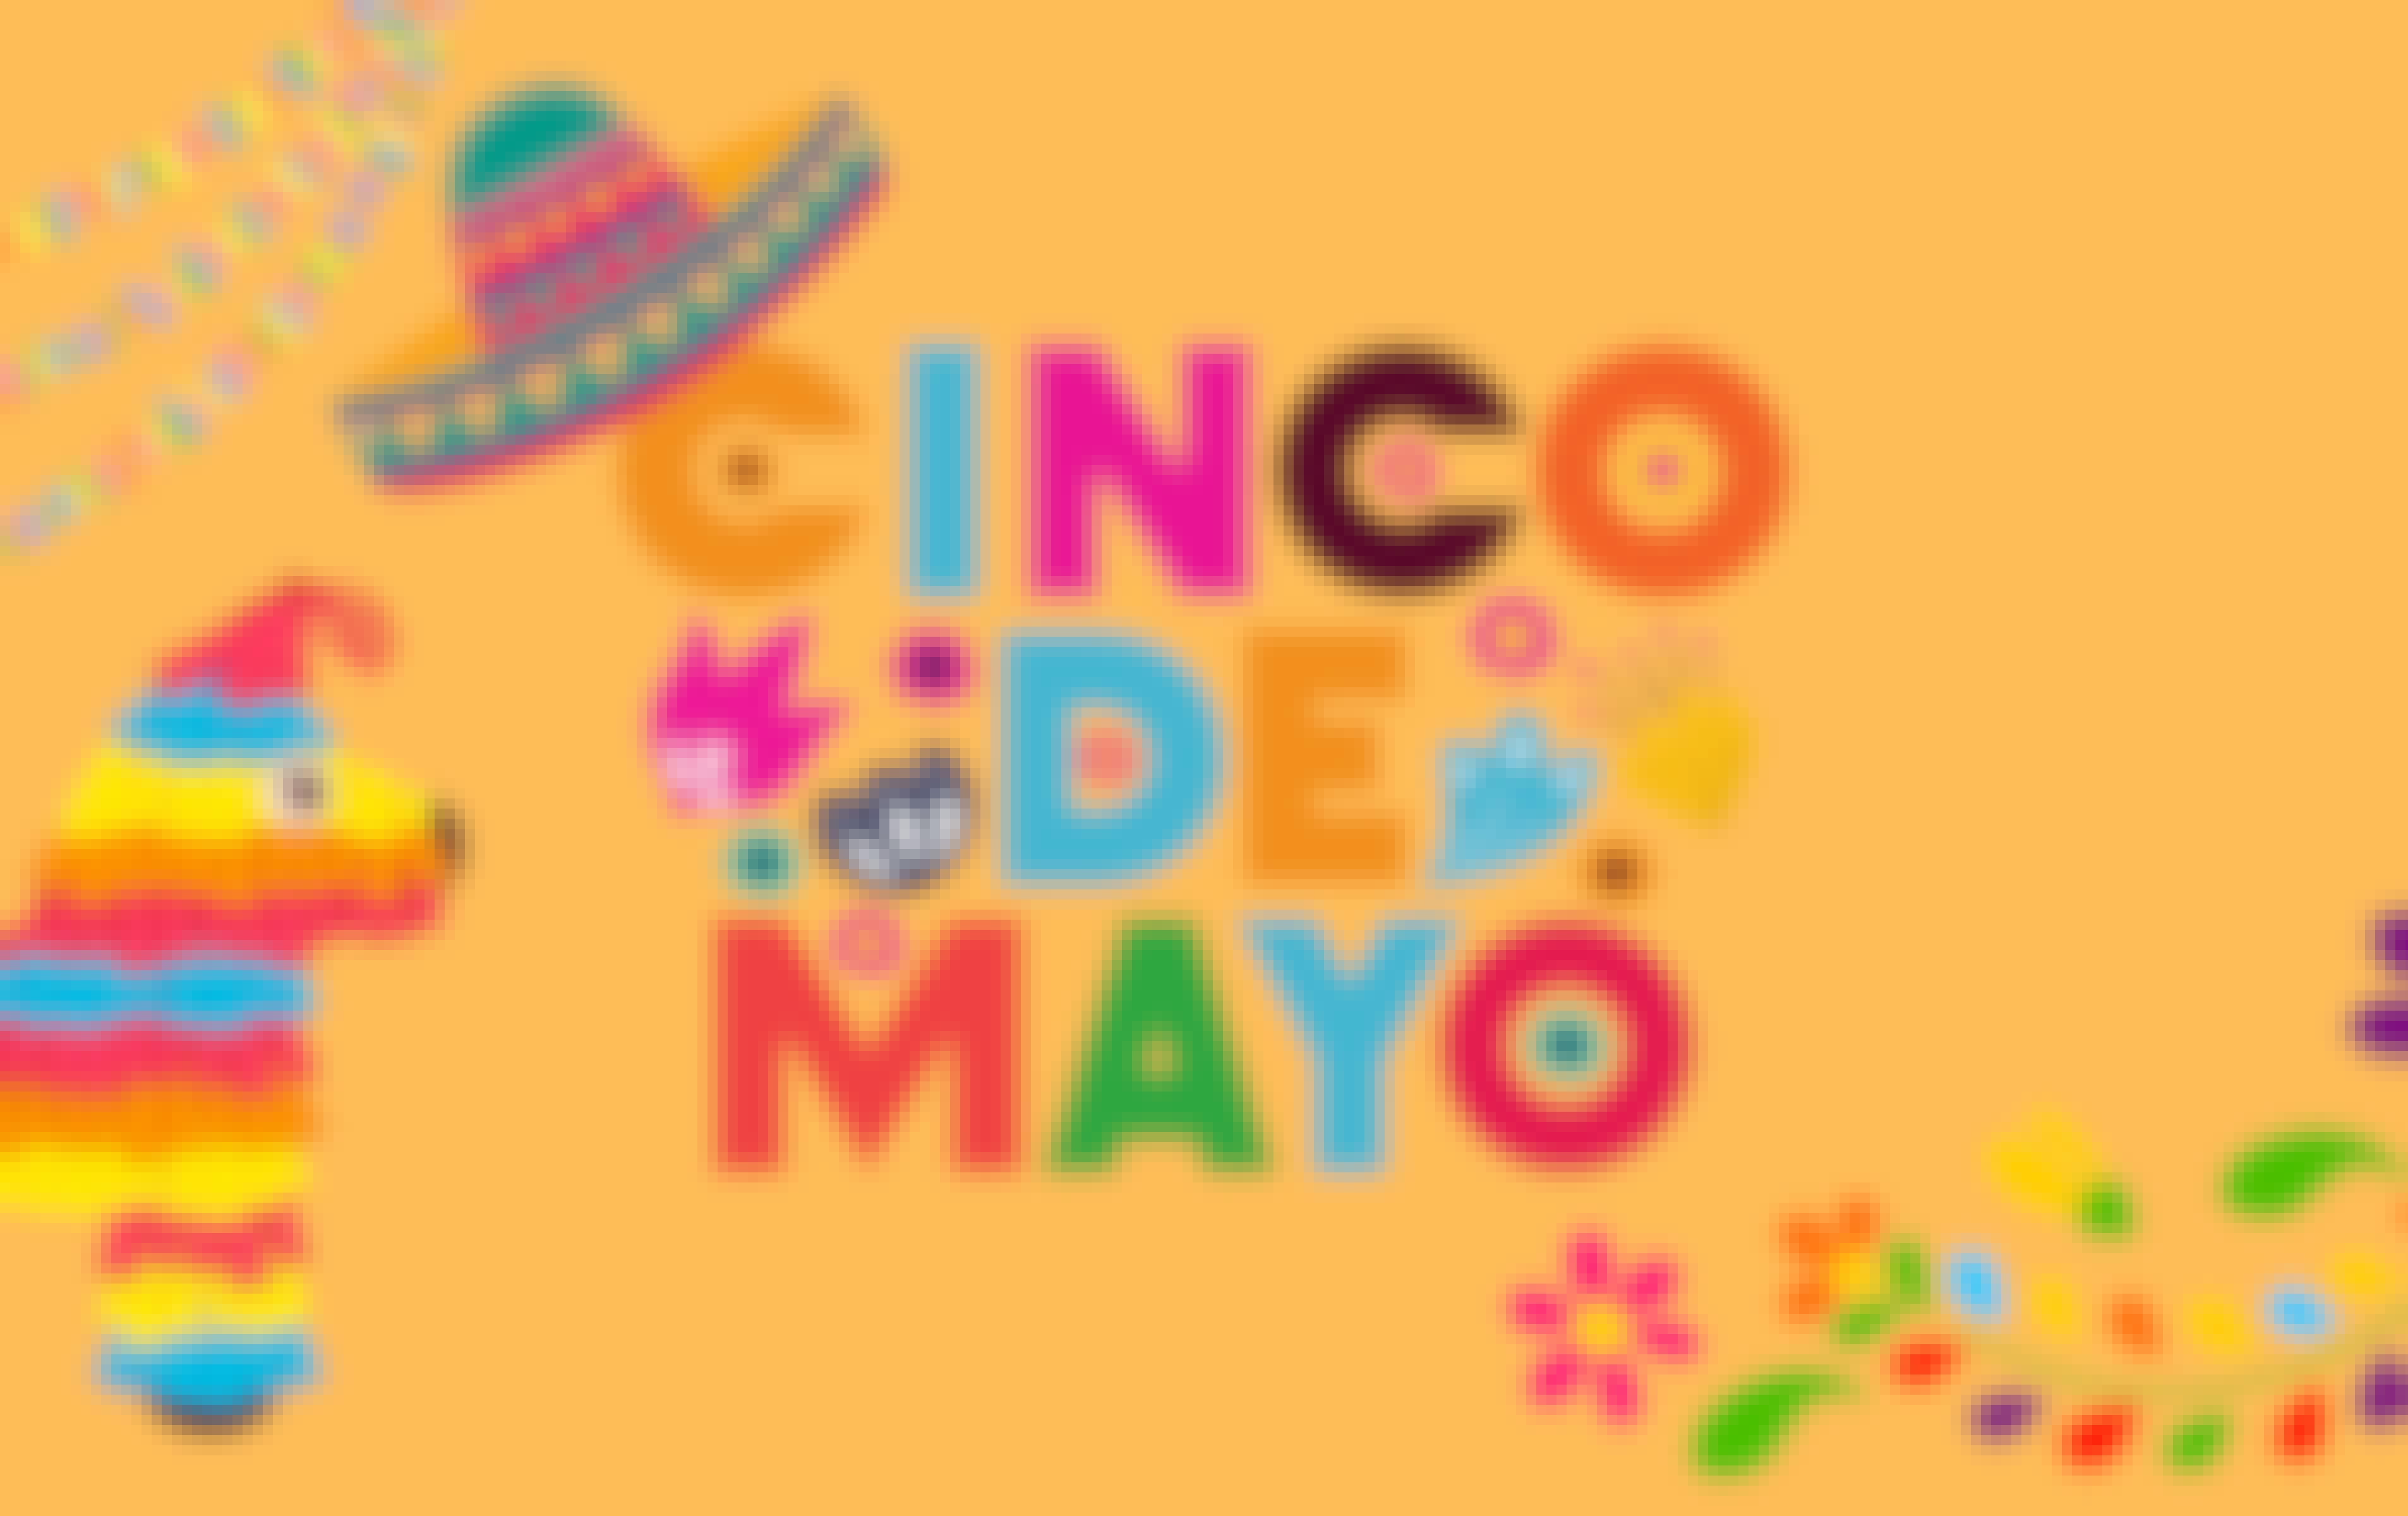 Get Ready For Cinco de Mayo!